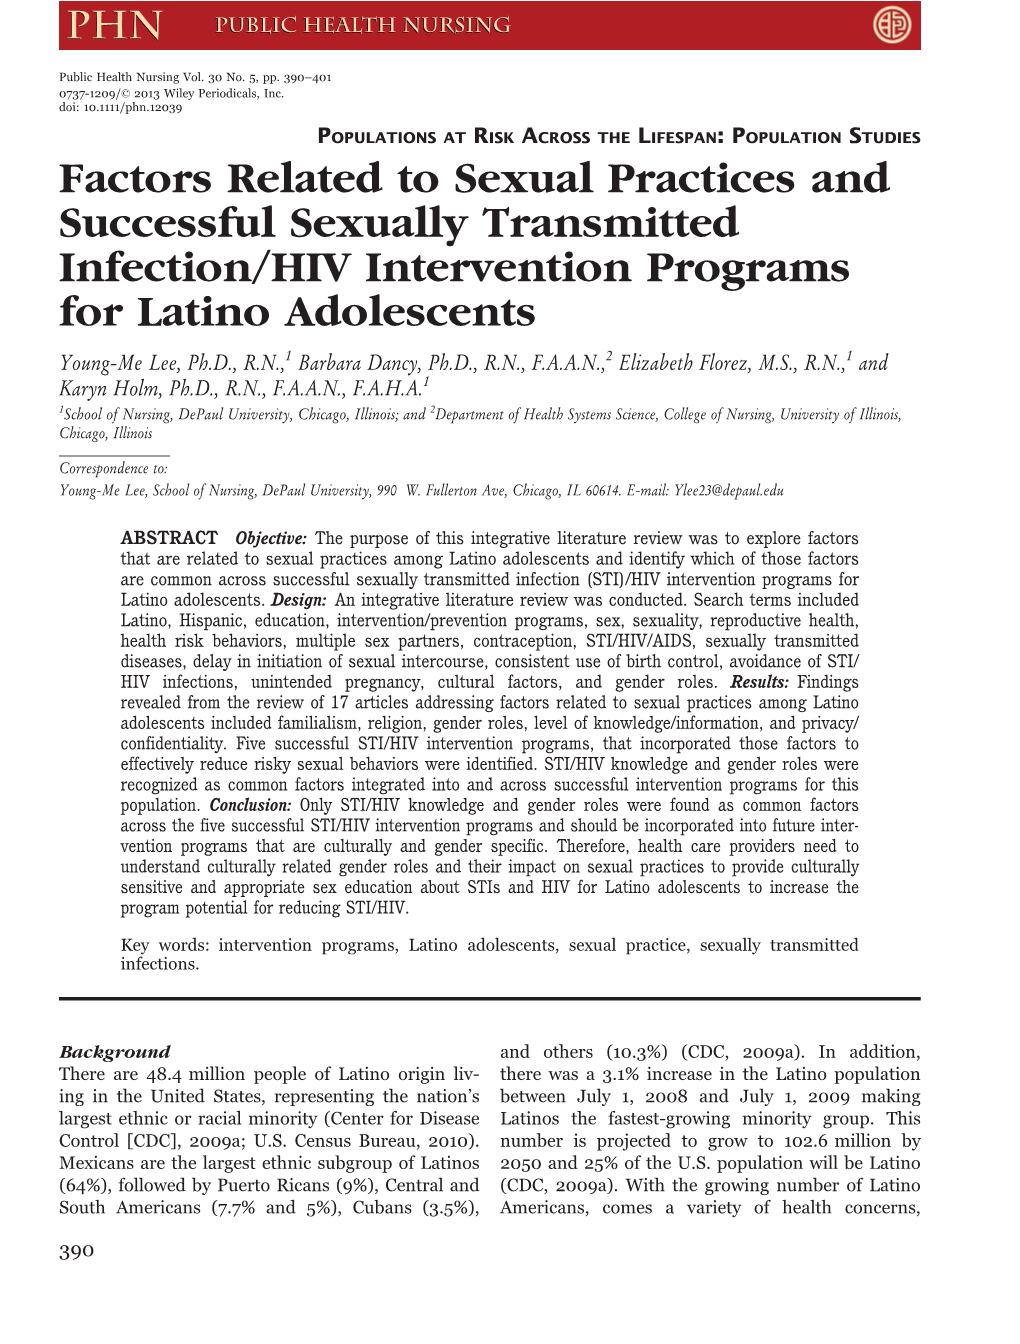 Sexual Practices & Successful STI/HIV Interventions